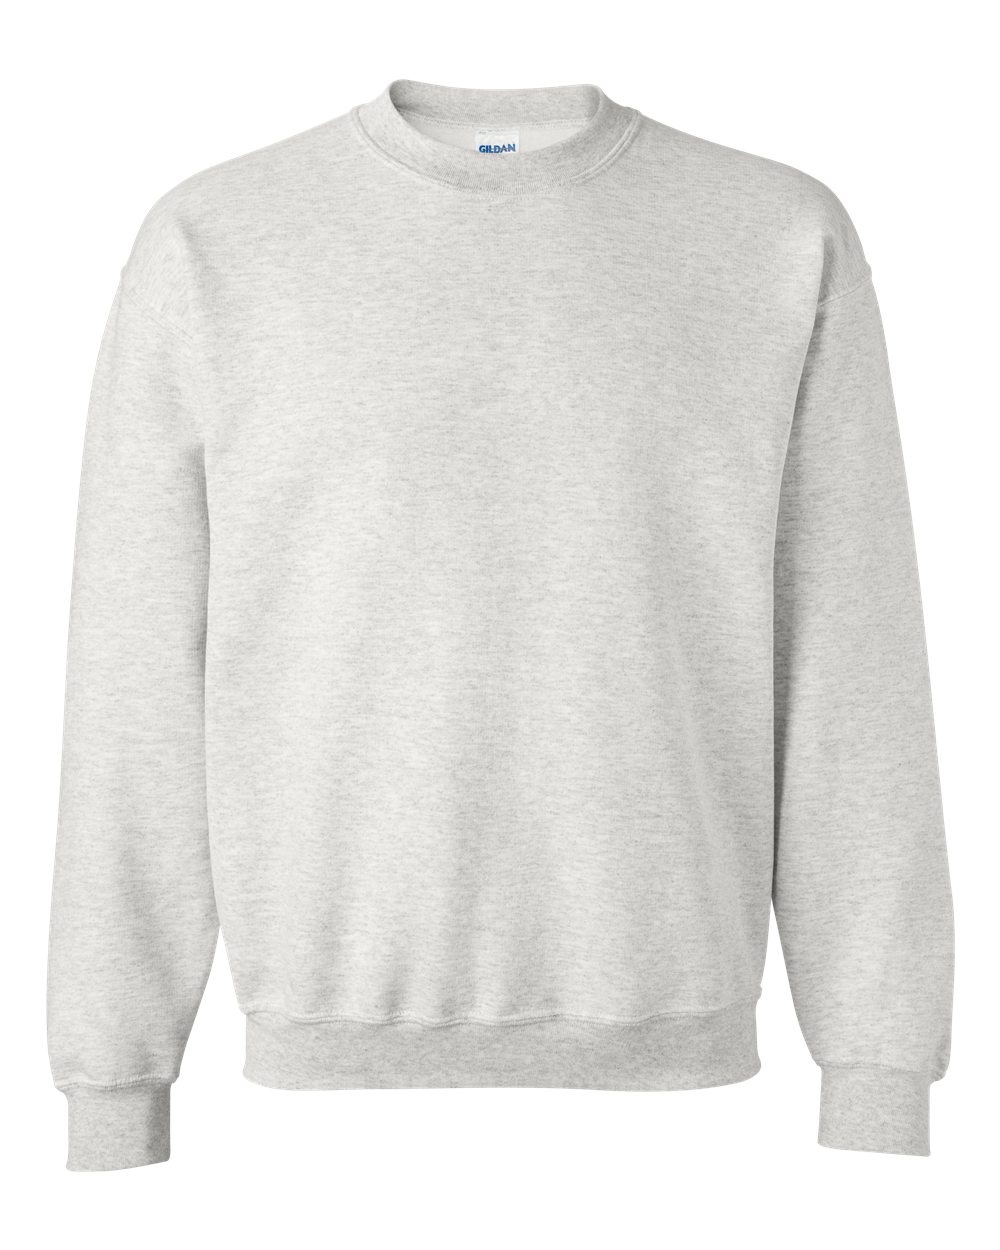 Gildan DryBlend® Crewneck Sweatshirt - image 1 of 5